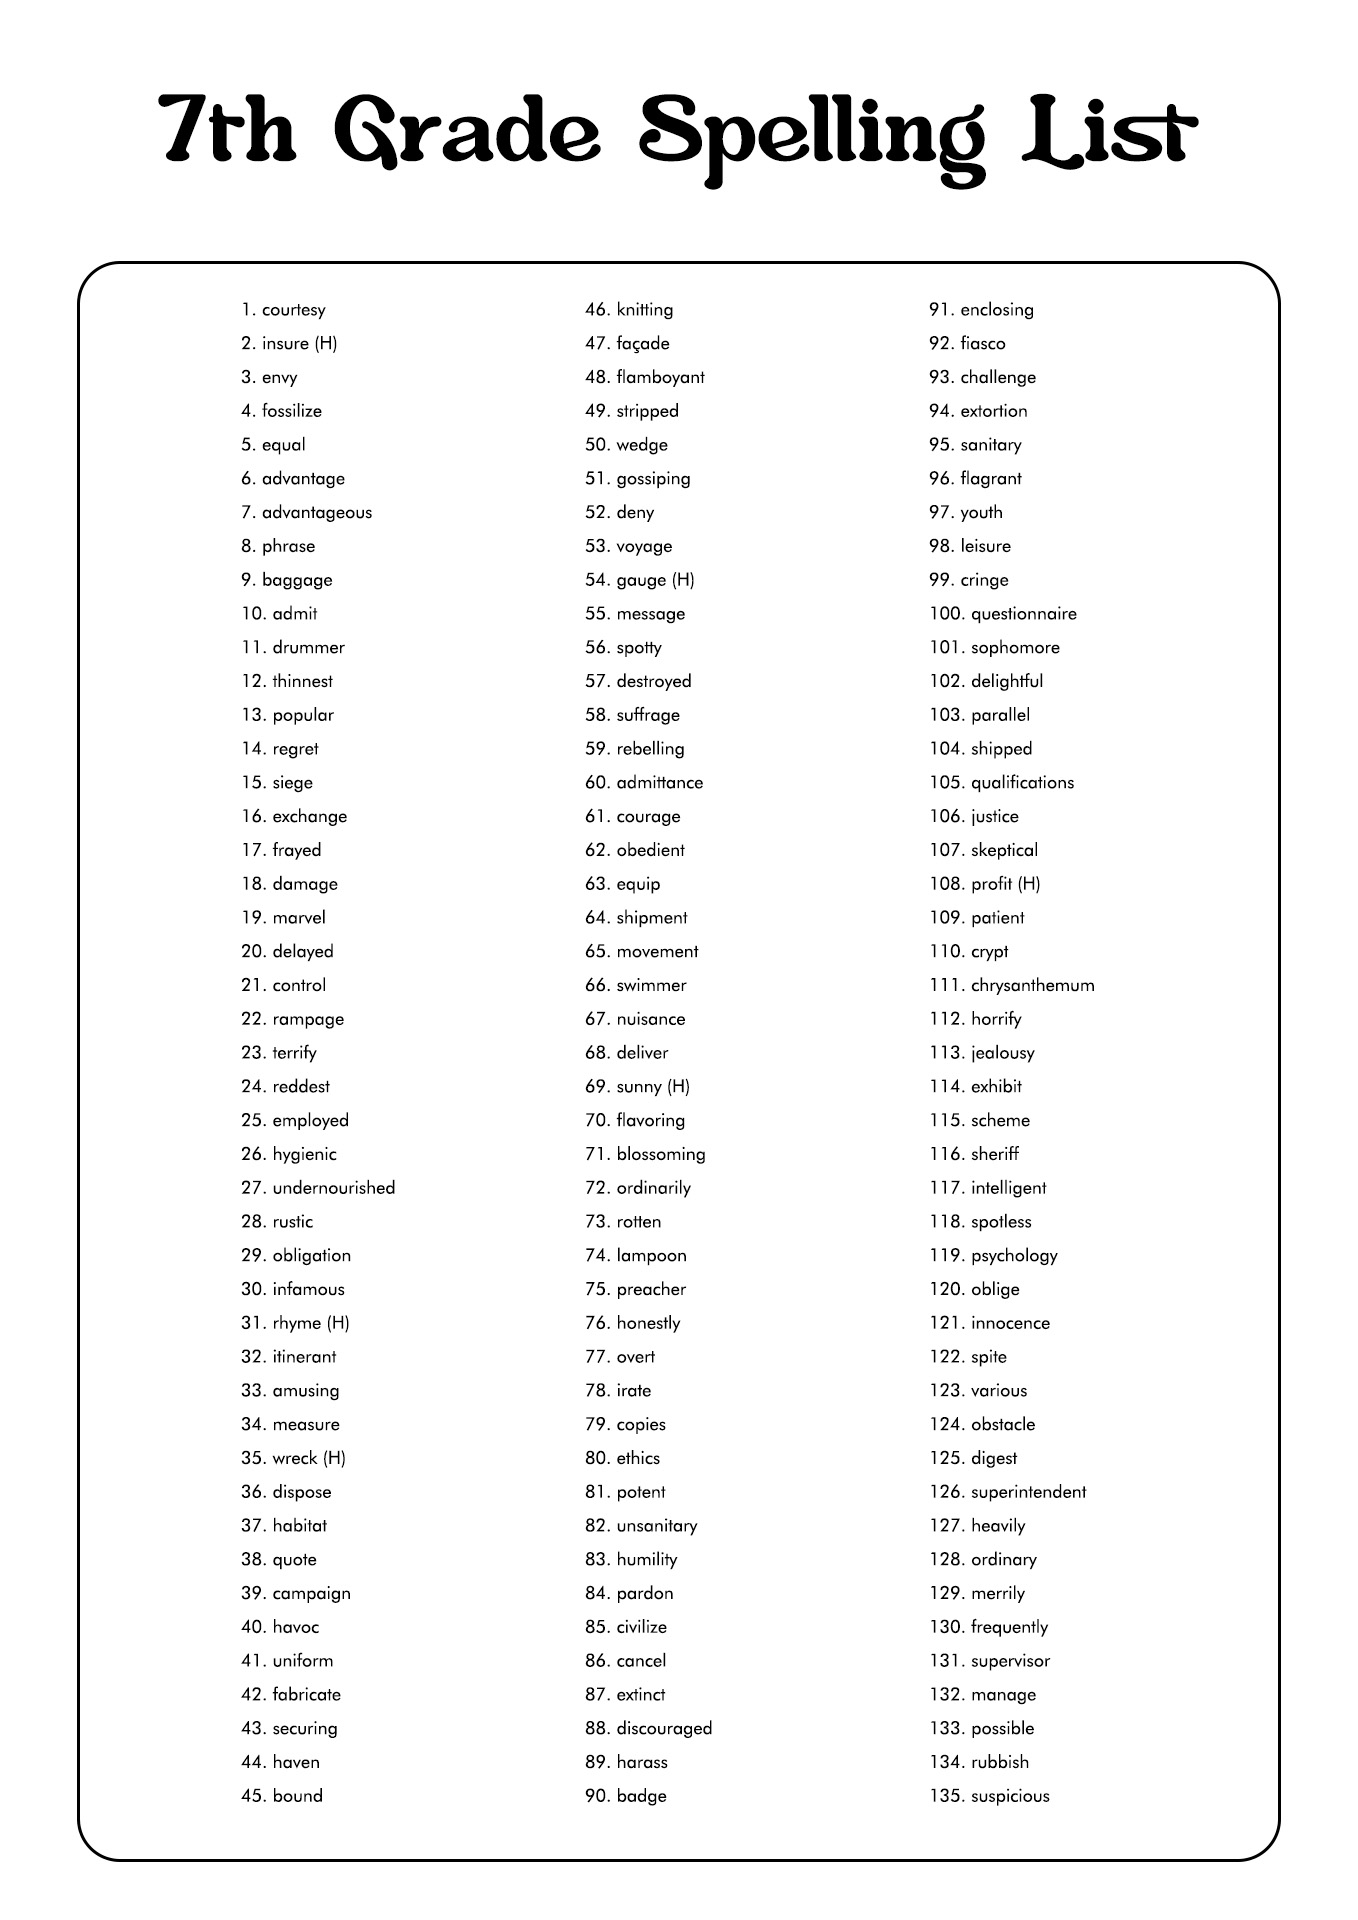 7th Grade Spelling Word List Image